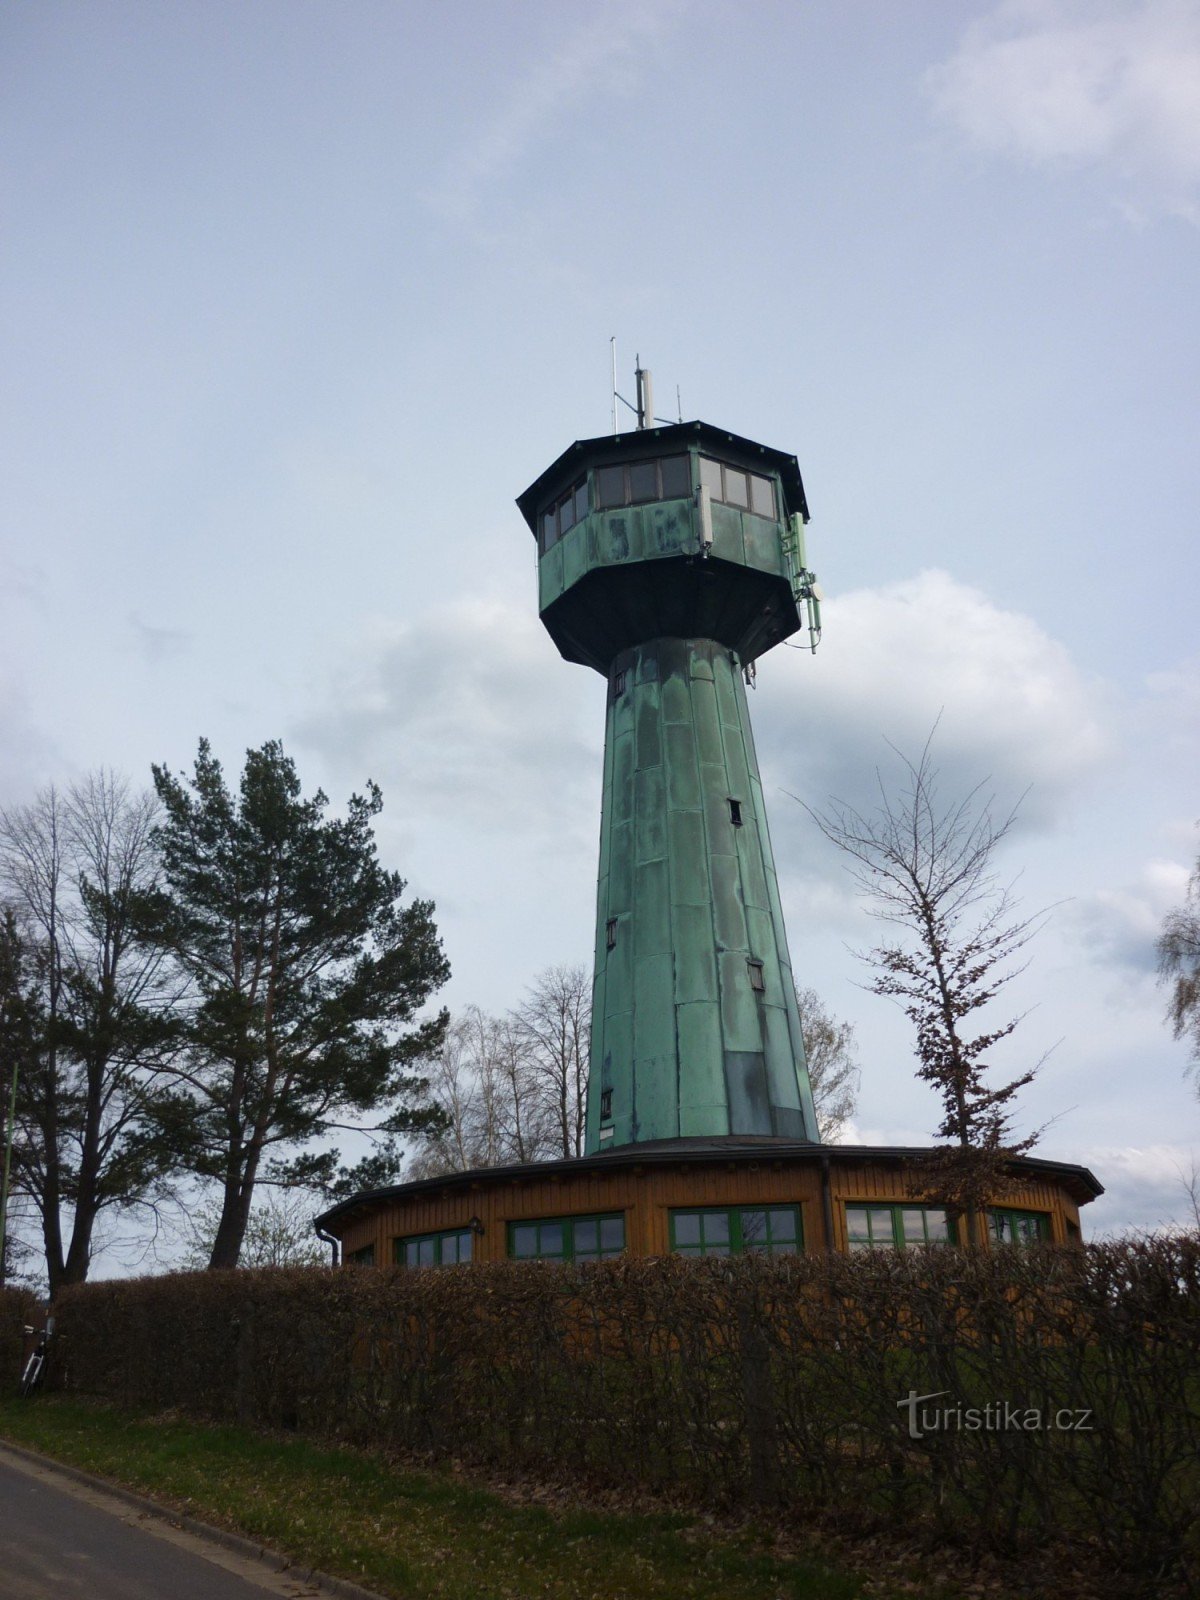 Tháp quan sát Grenzelandturm ở Neualbenreuth